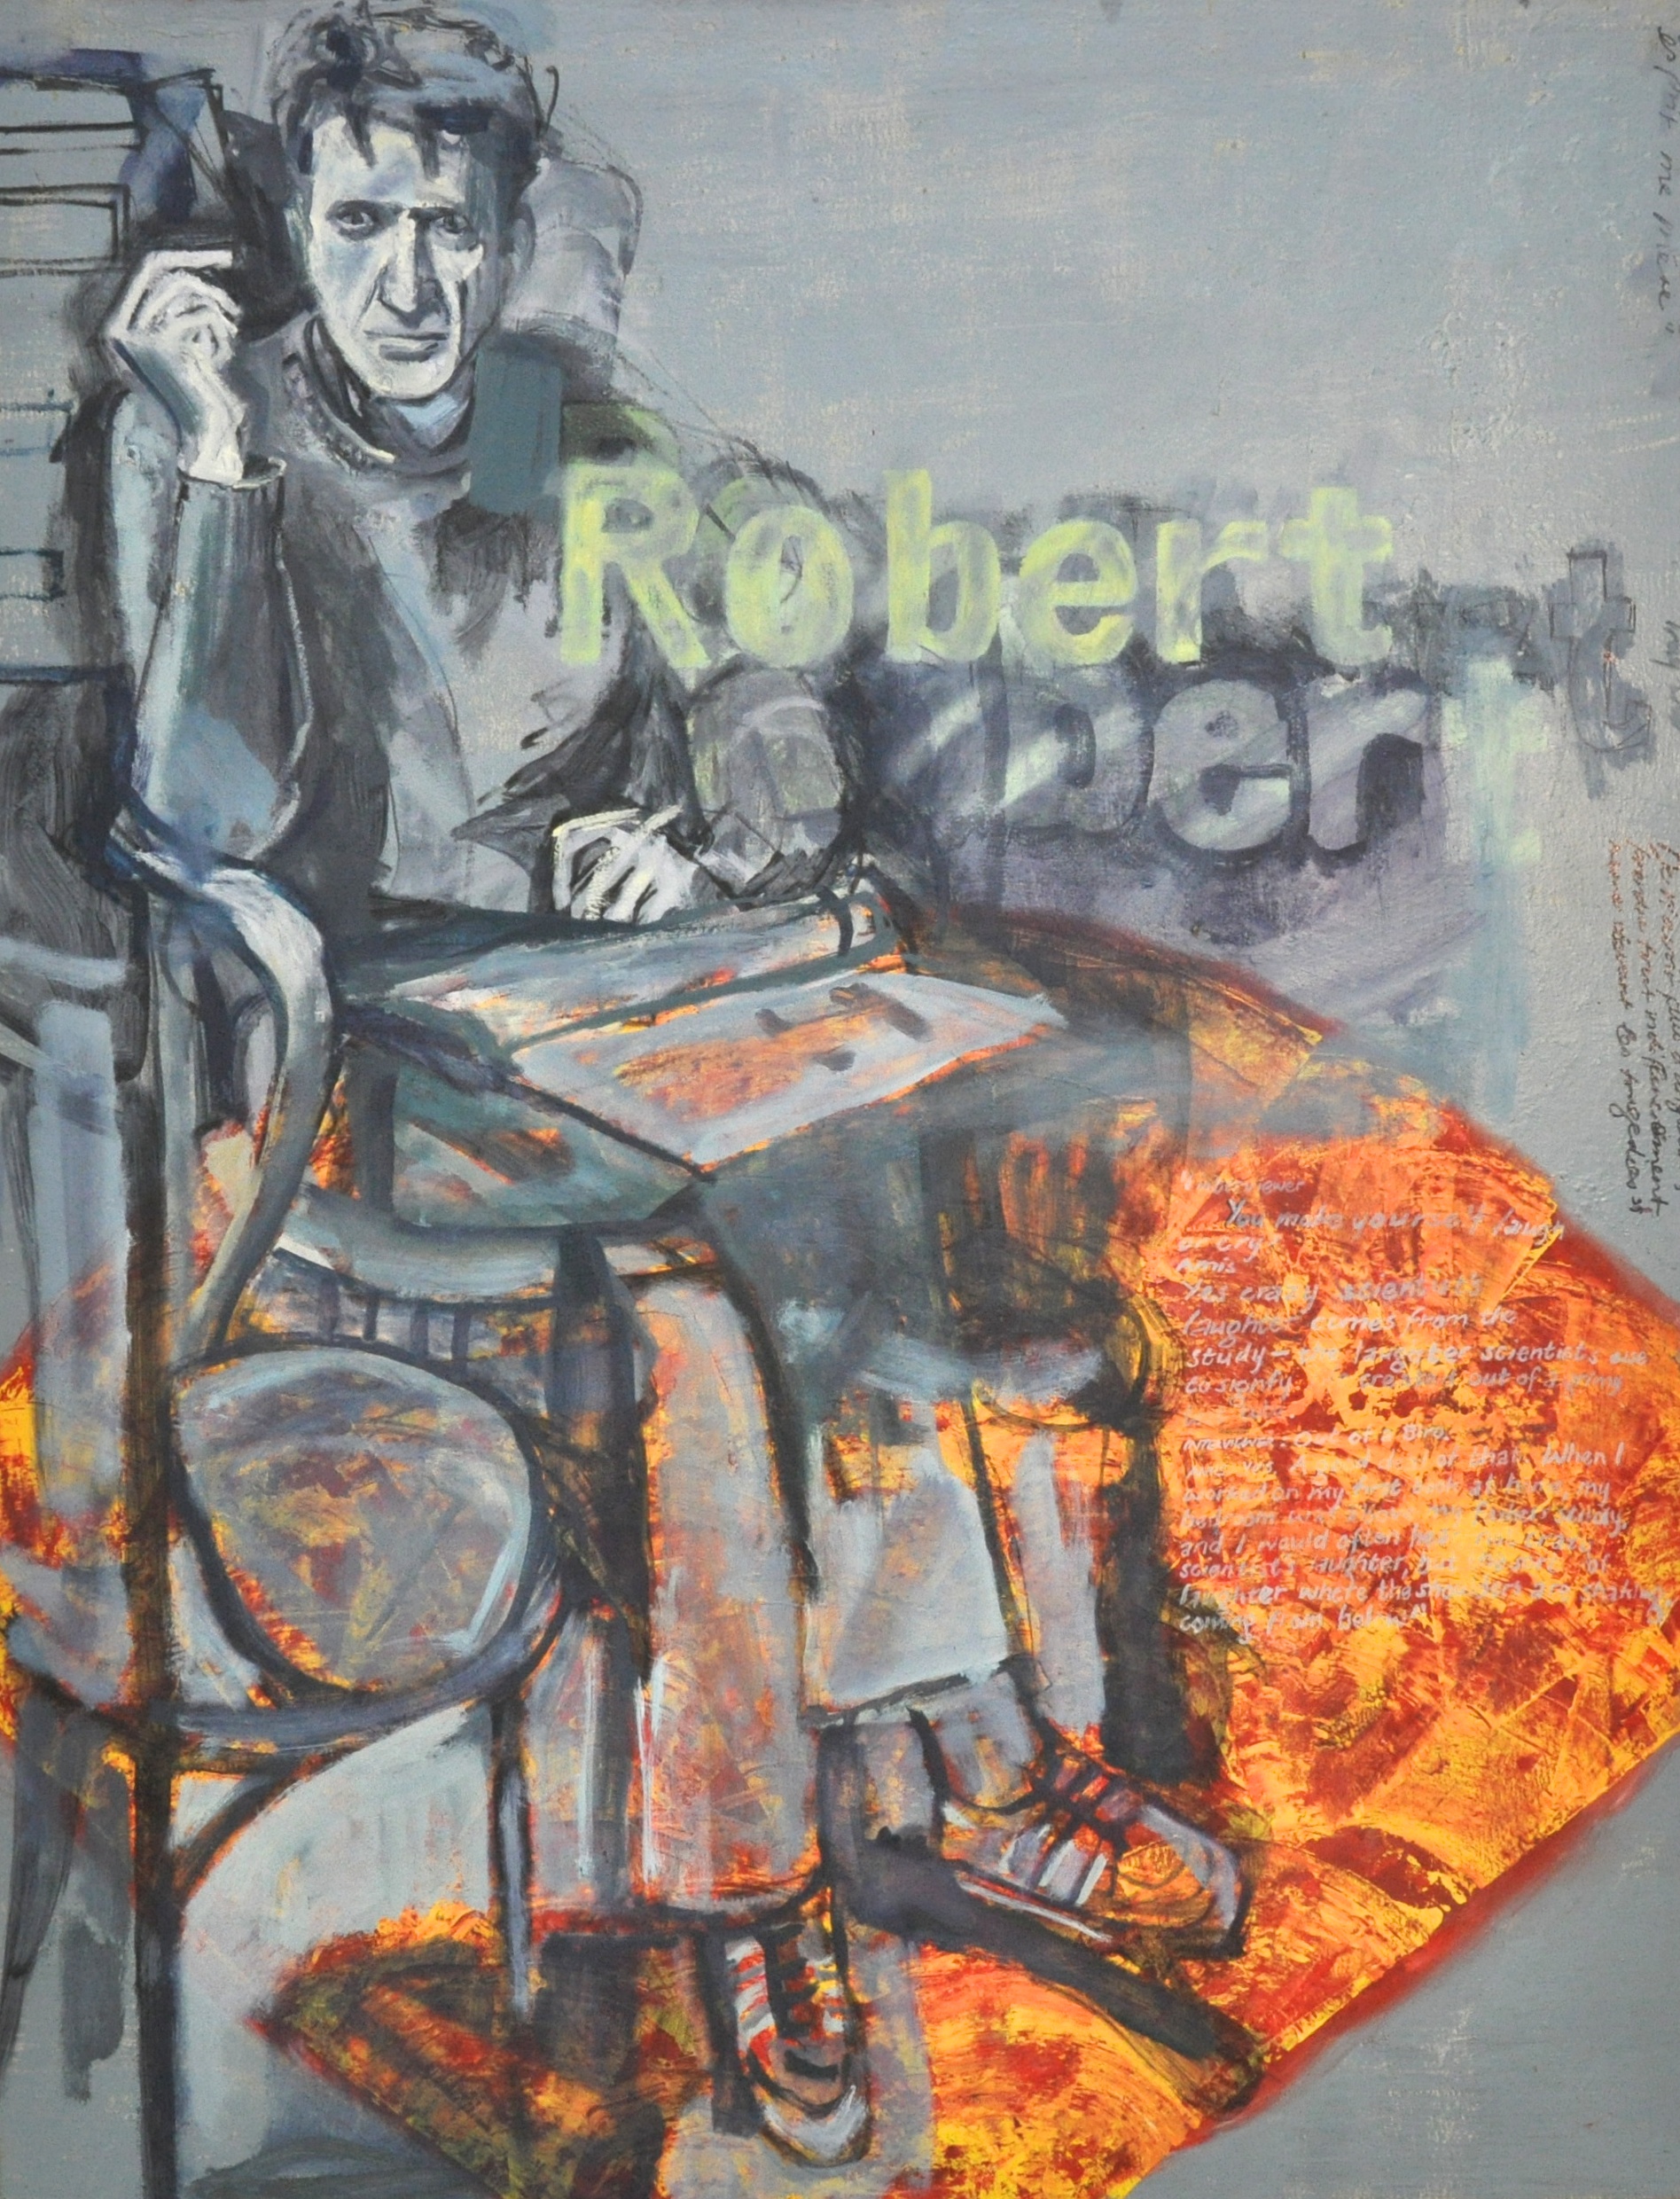 Robert de Niro senior 
Oil on canvas 
114 x 146 cm